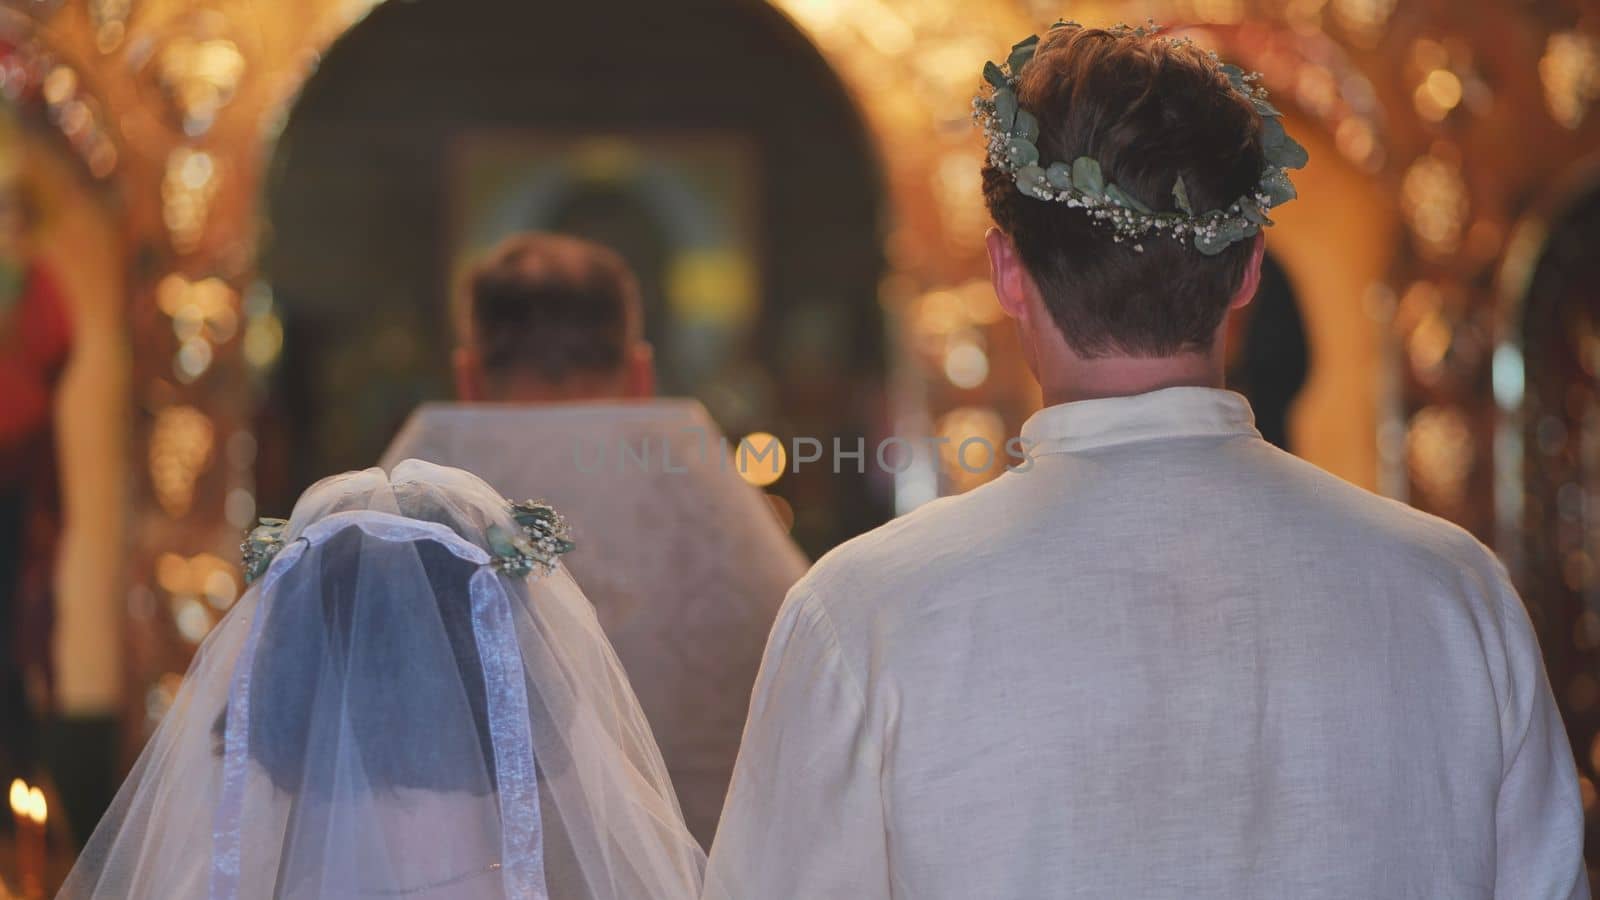 Newlyweds at a church wedding ceremony